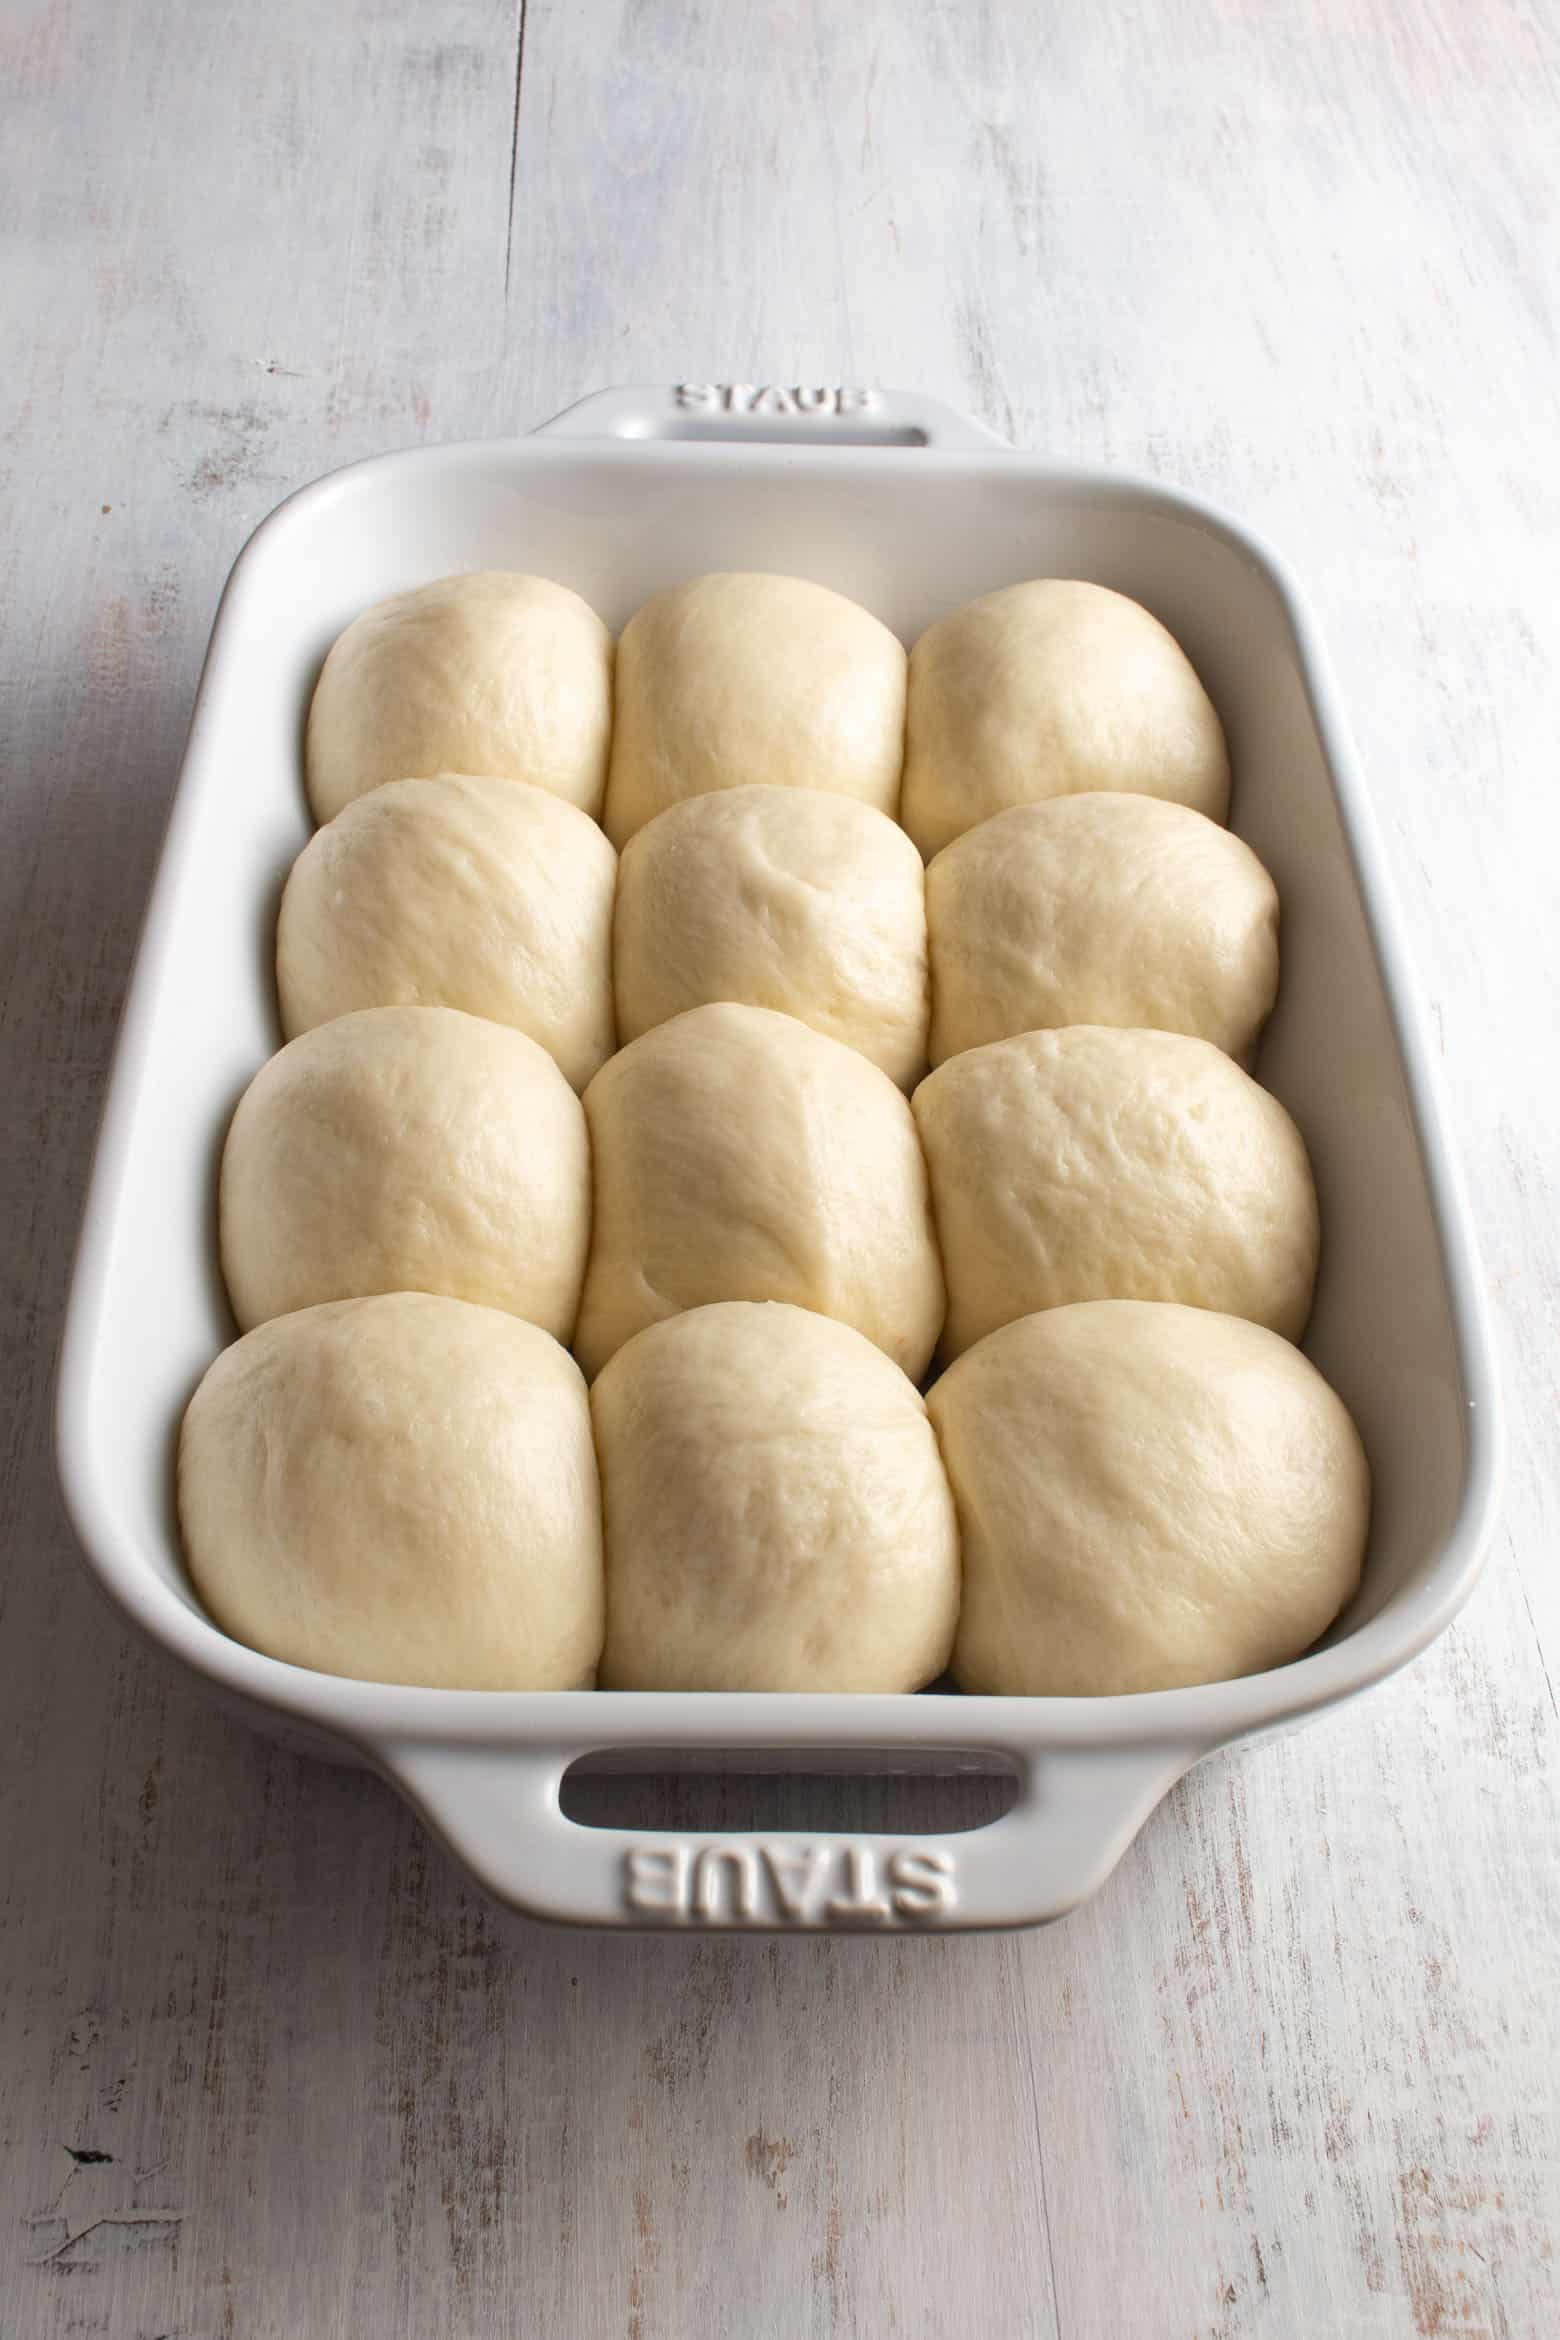 Balls of risen dough in a baking pan.